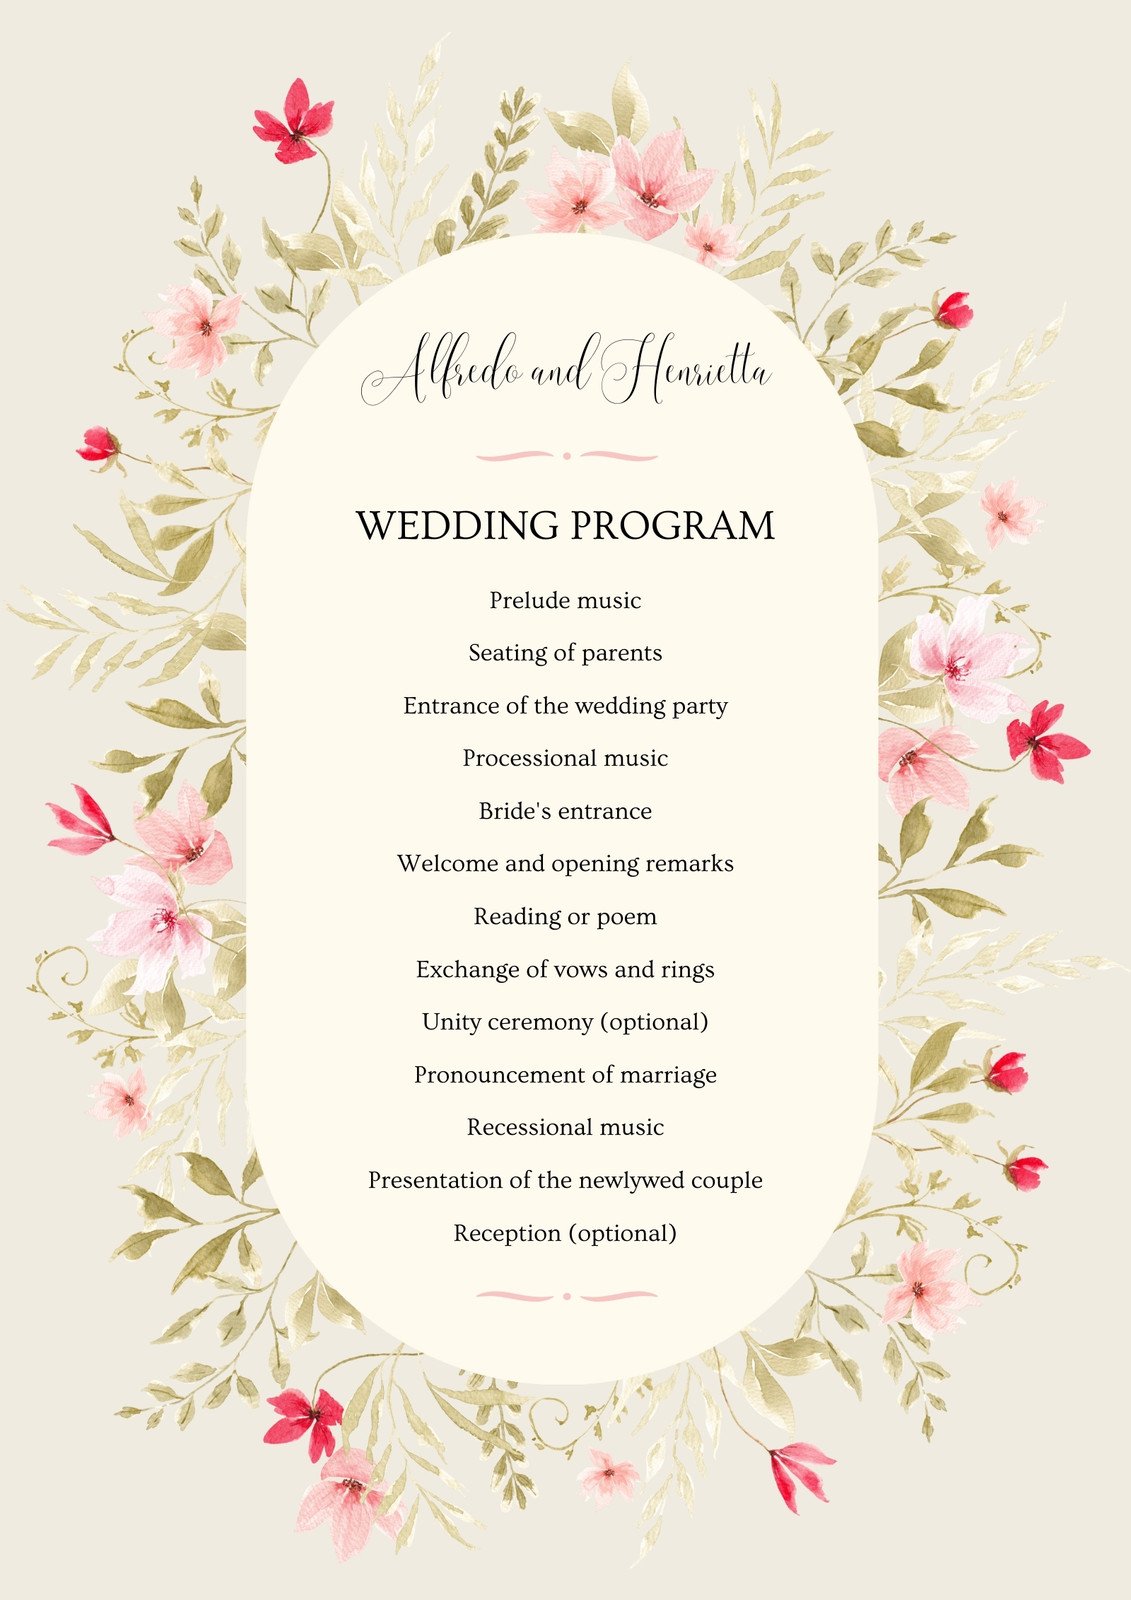 Pink and Cream Watercolor Floral Border Wedding Program